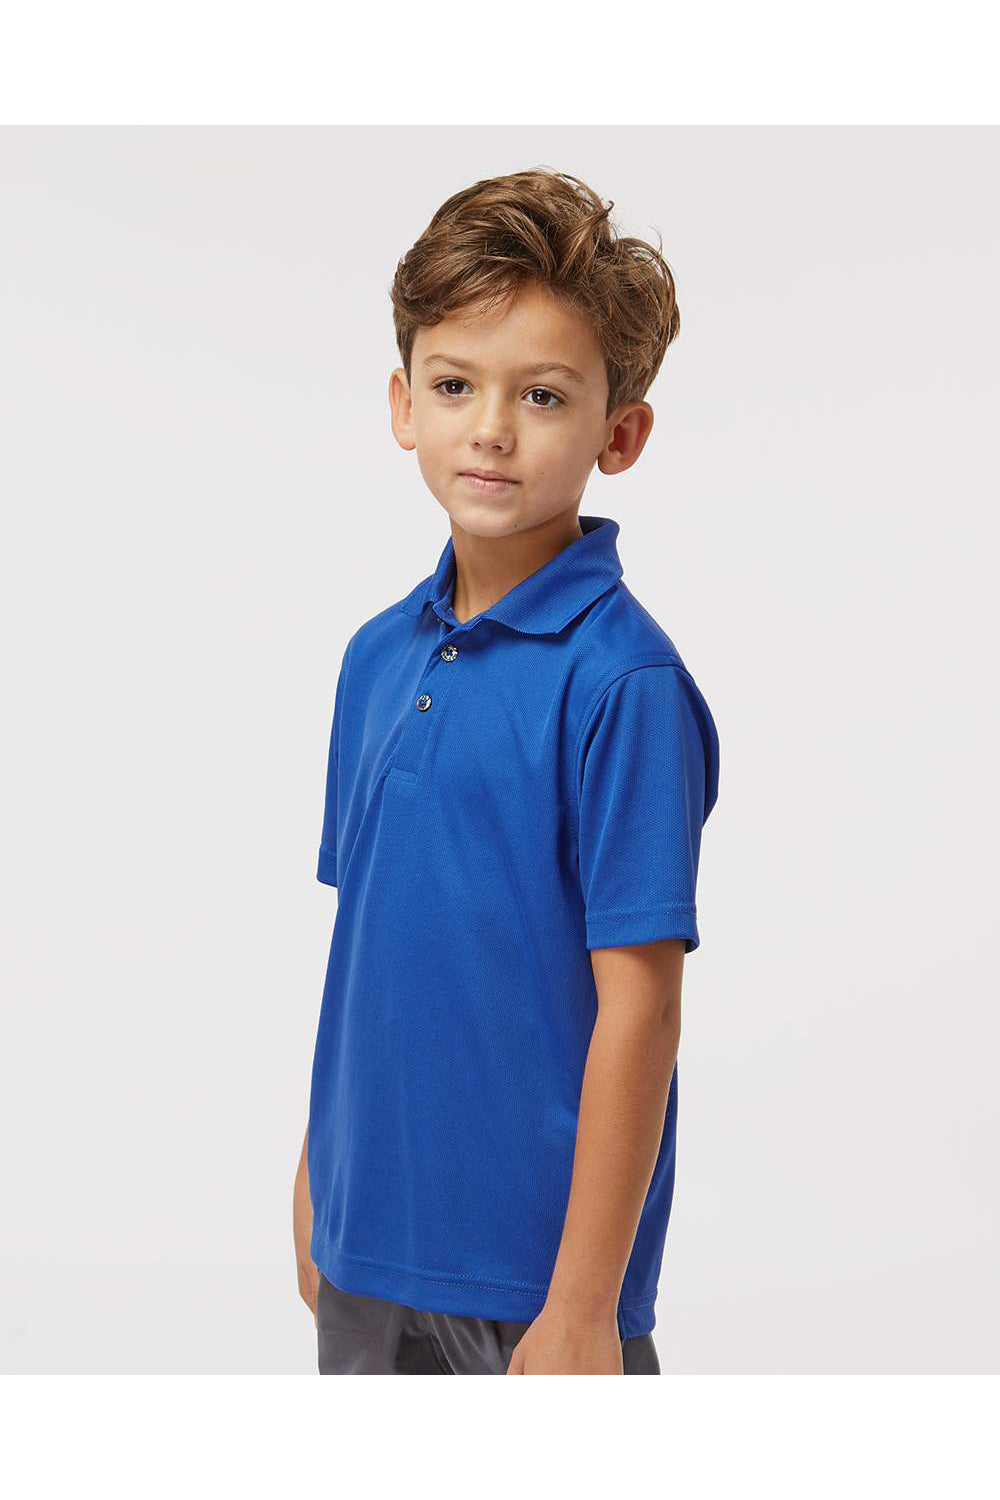 Paragon 108Y Youth Saratoga Performance Mini Mesh Short Sleeve Polo Shirt Royal Blue Model Side